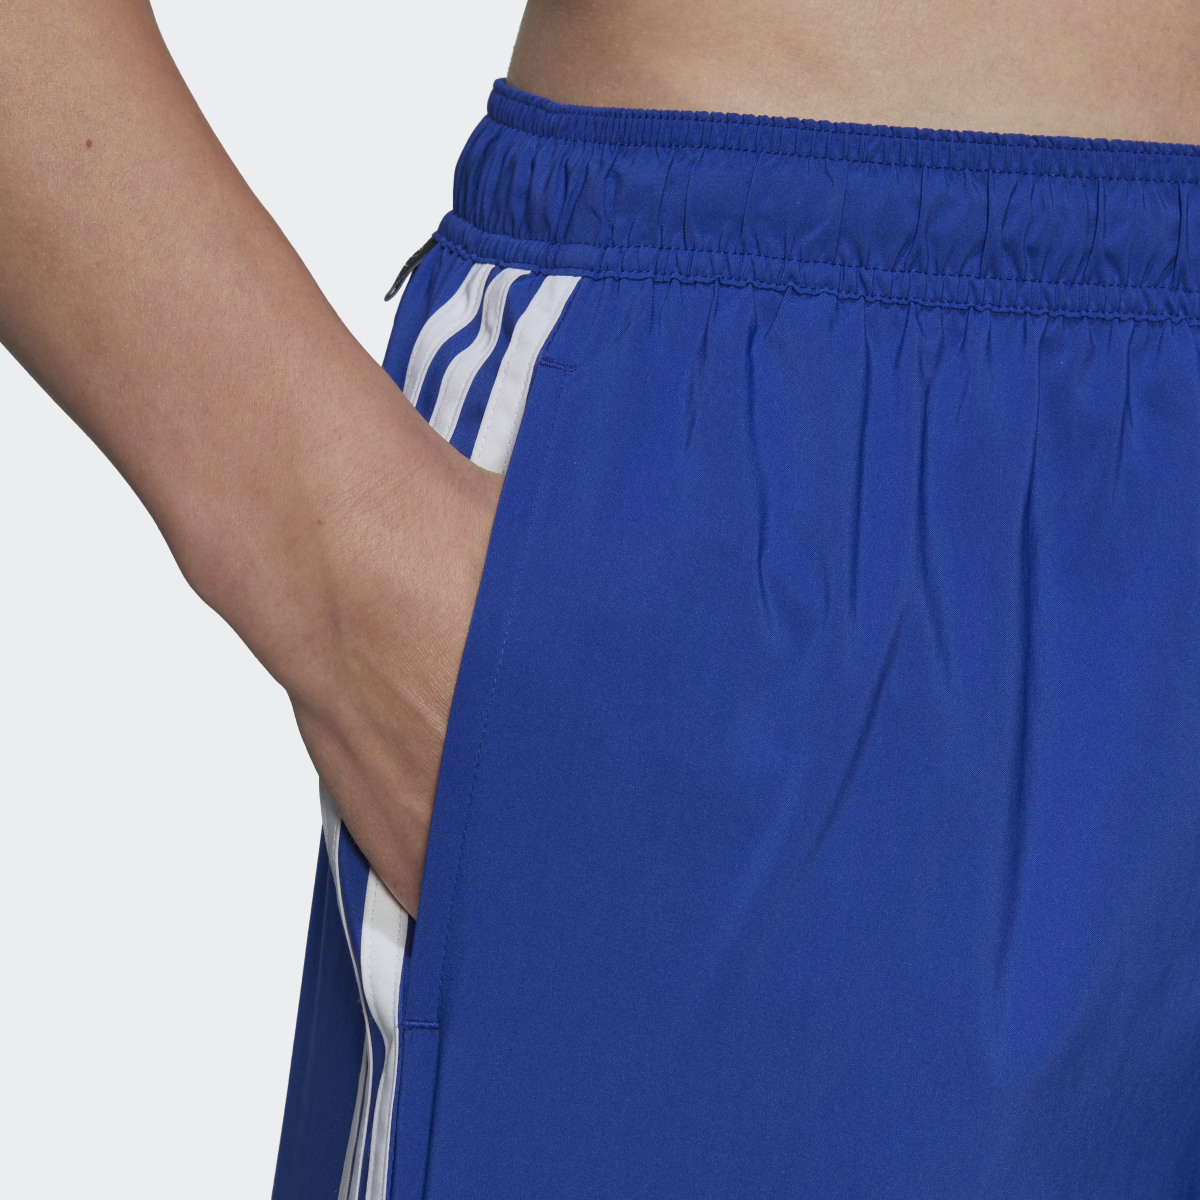 Adidas 3-Stripes CLX Swim Shorts. 6